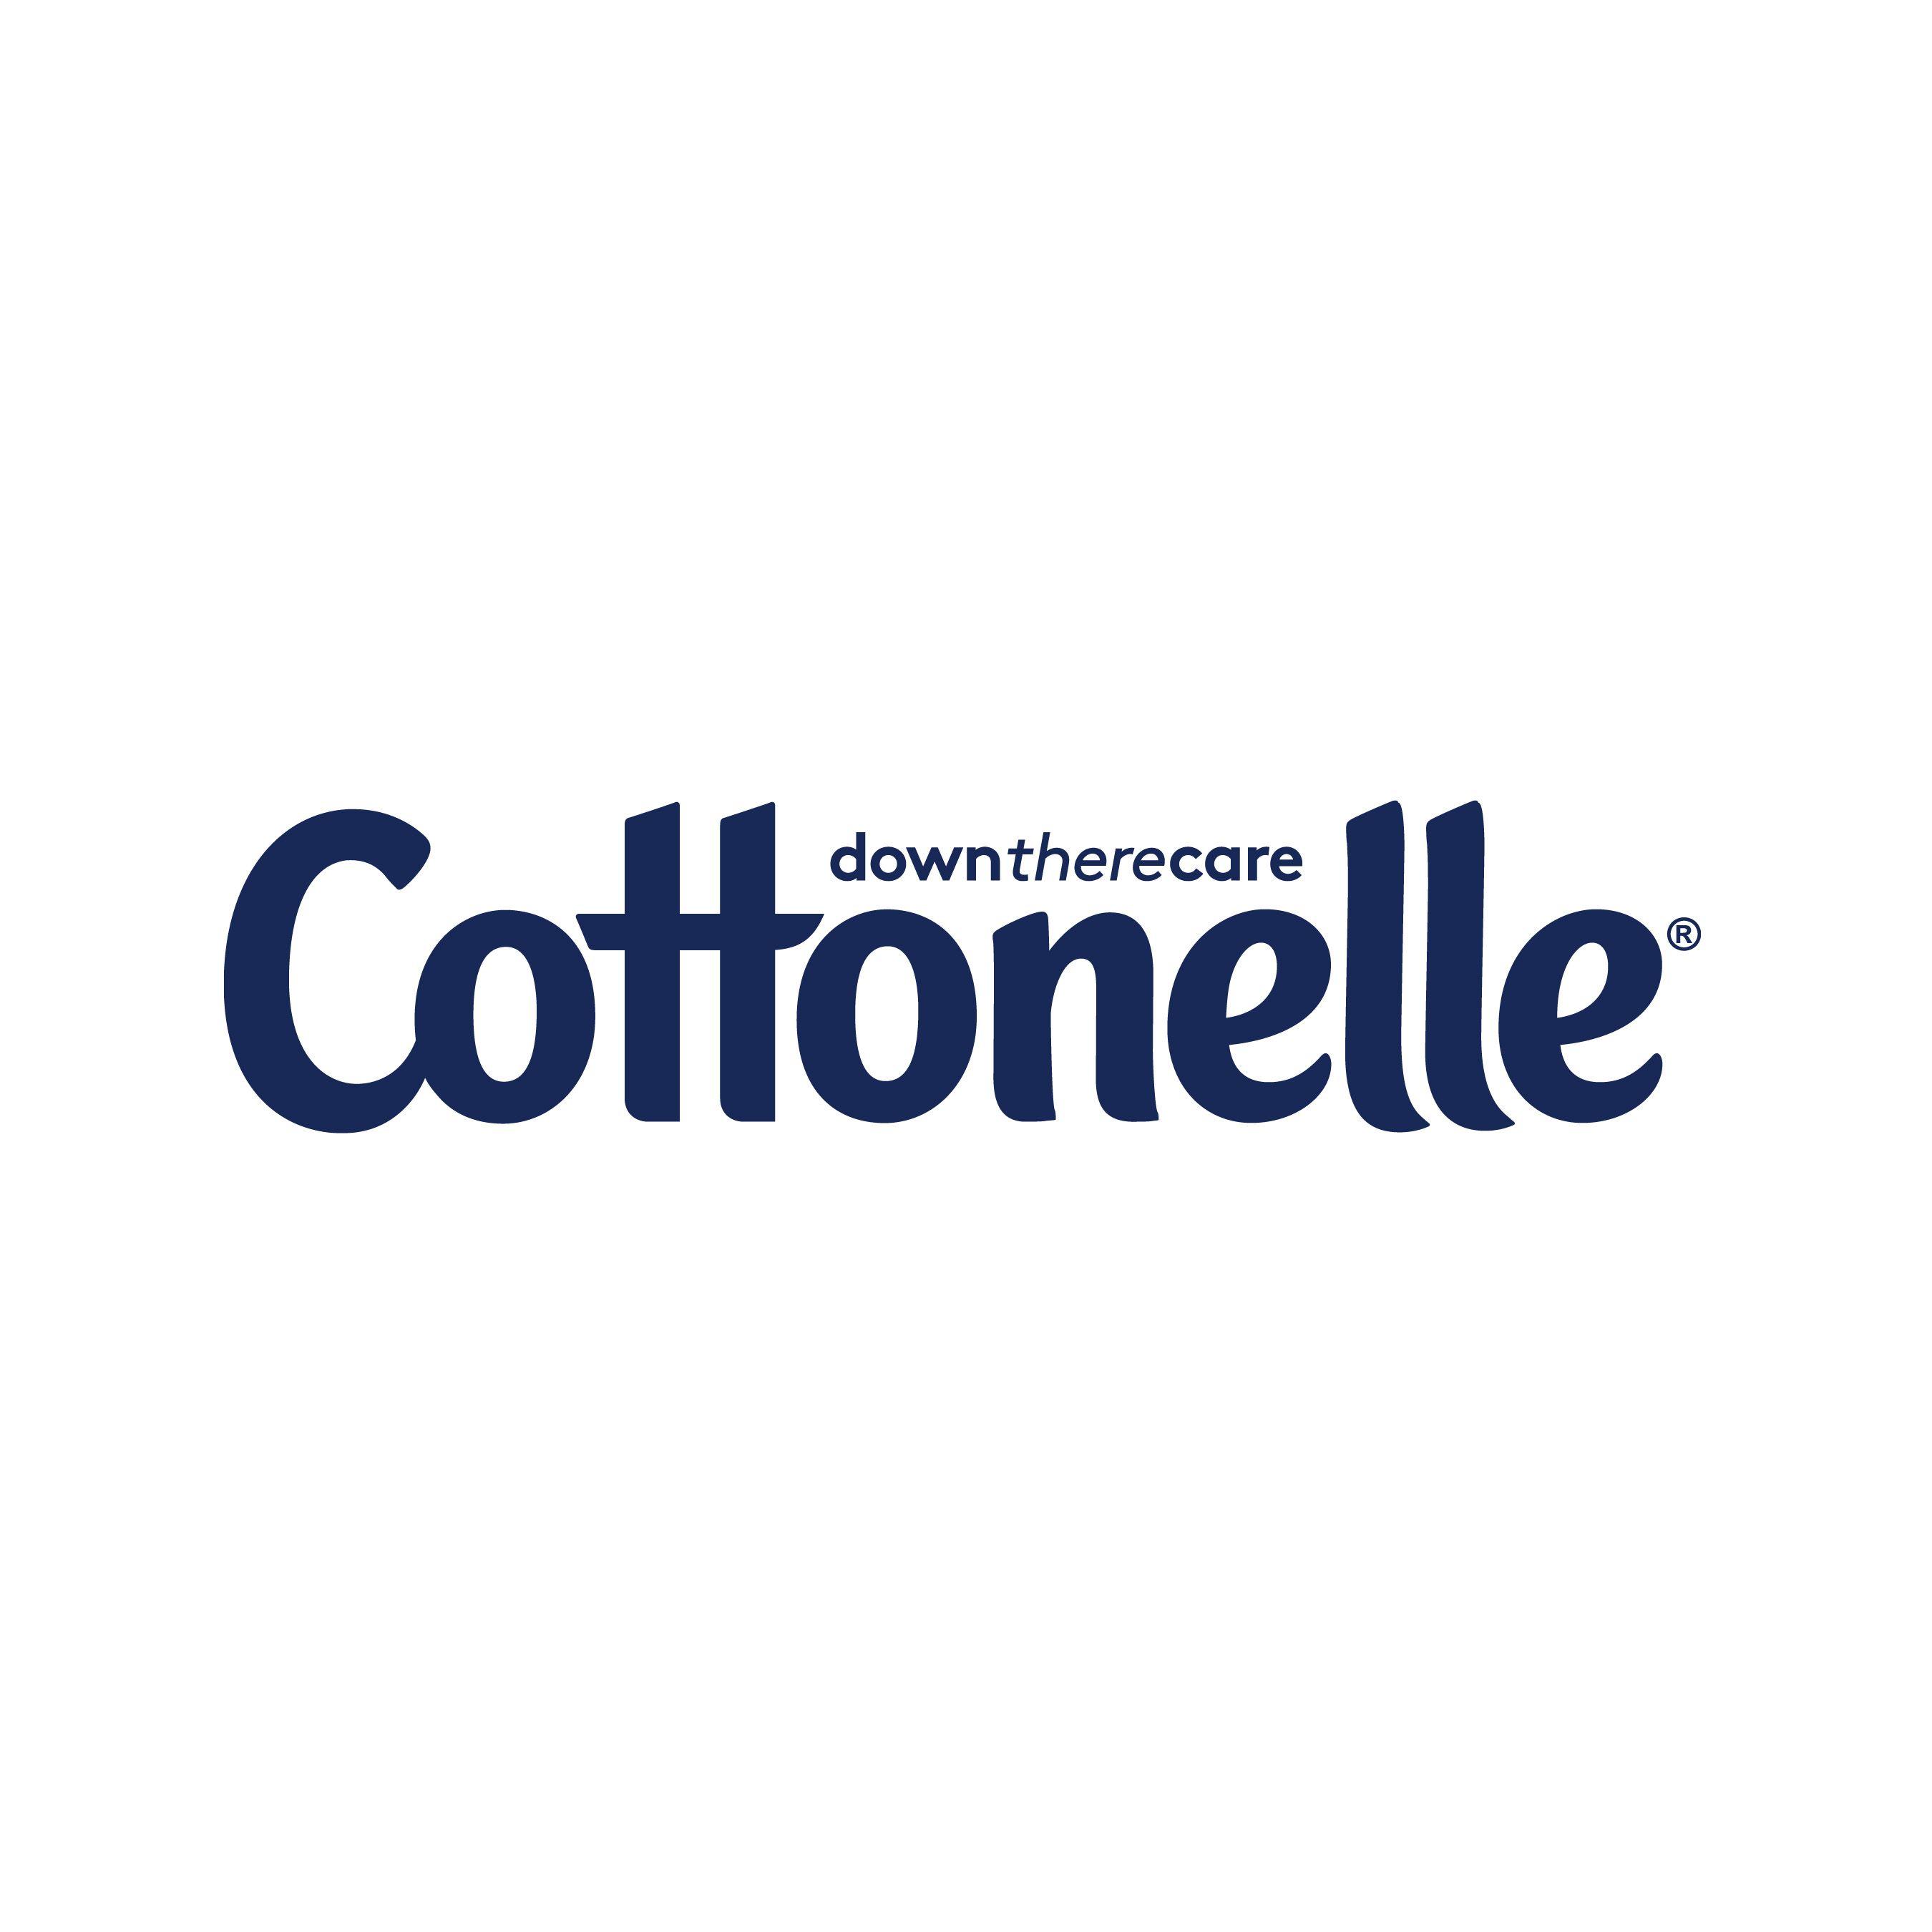 Cottonelle Logo - Cottonelle® brand and Jodi Shays Spark National Dialogue